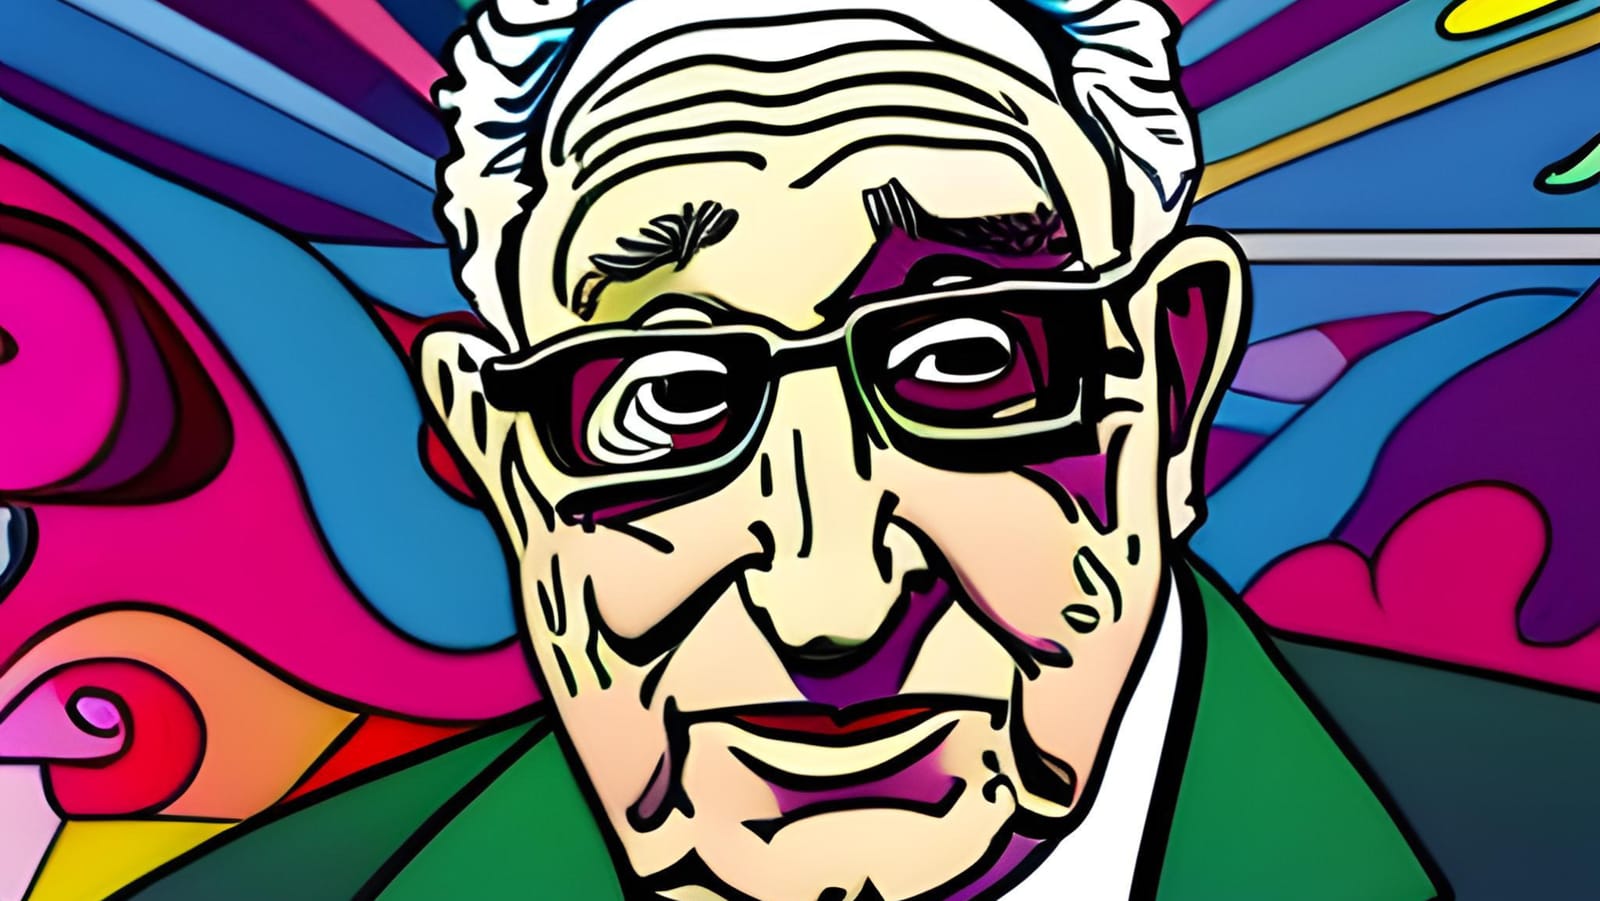 More machine-generated Kissinger art